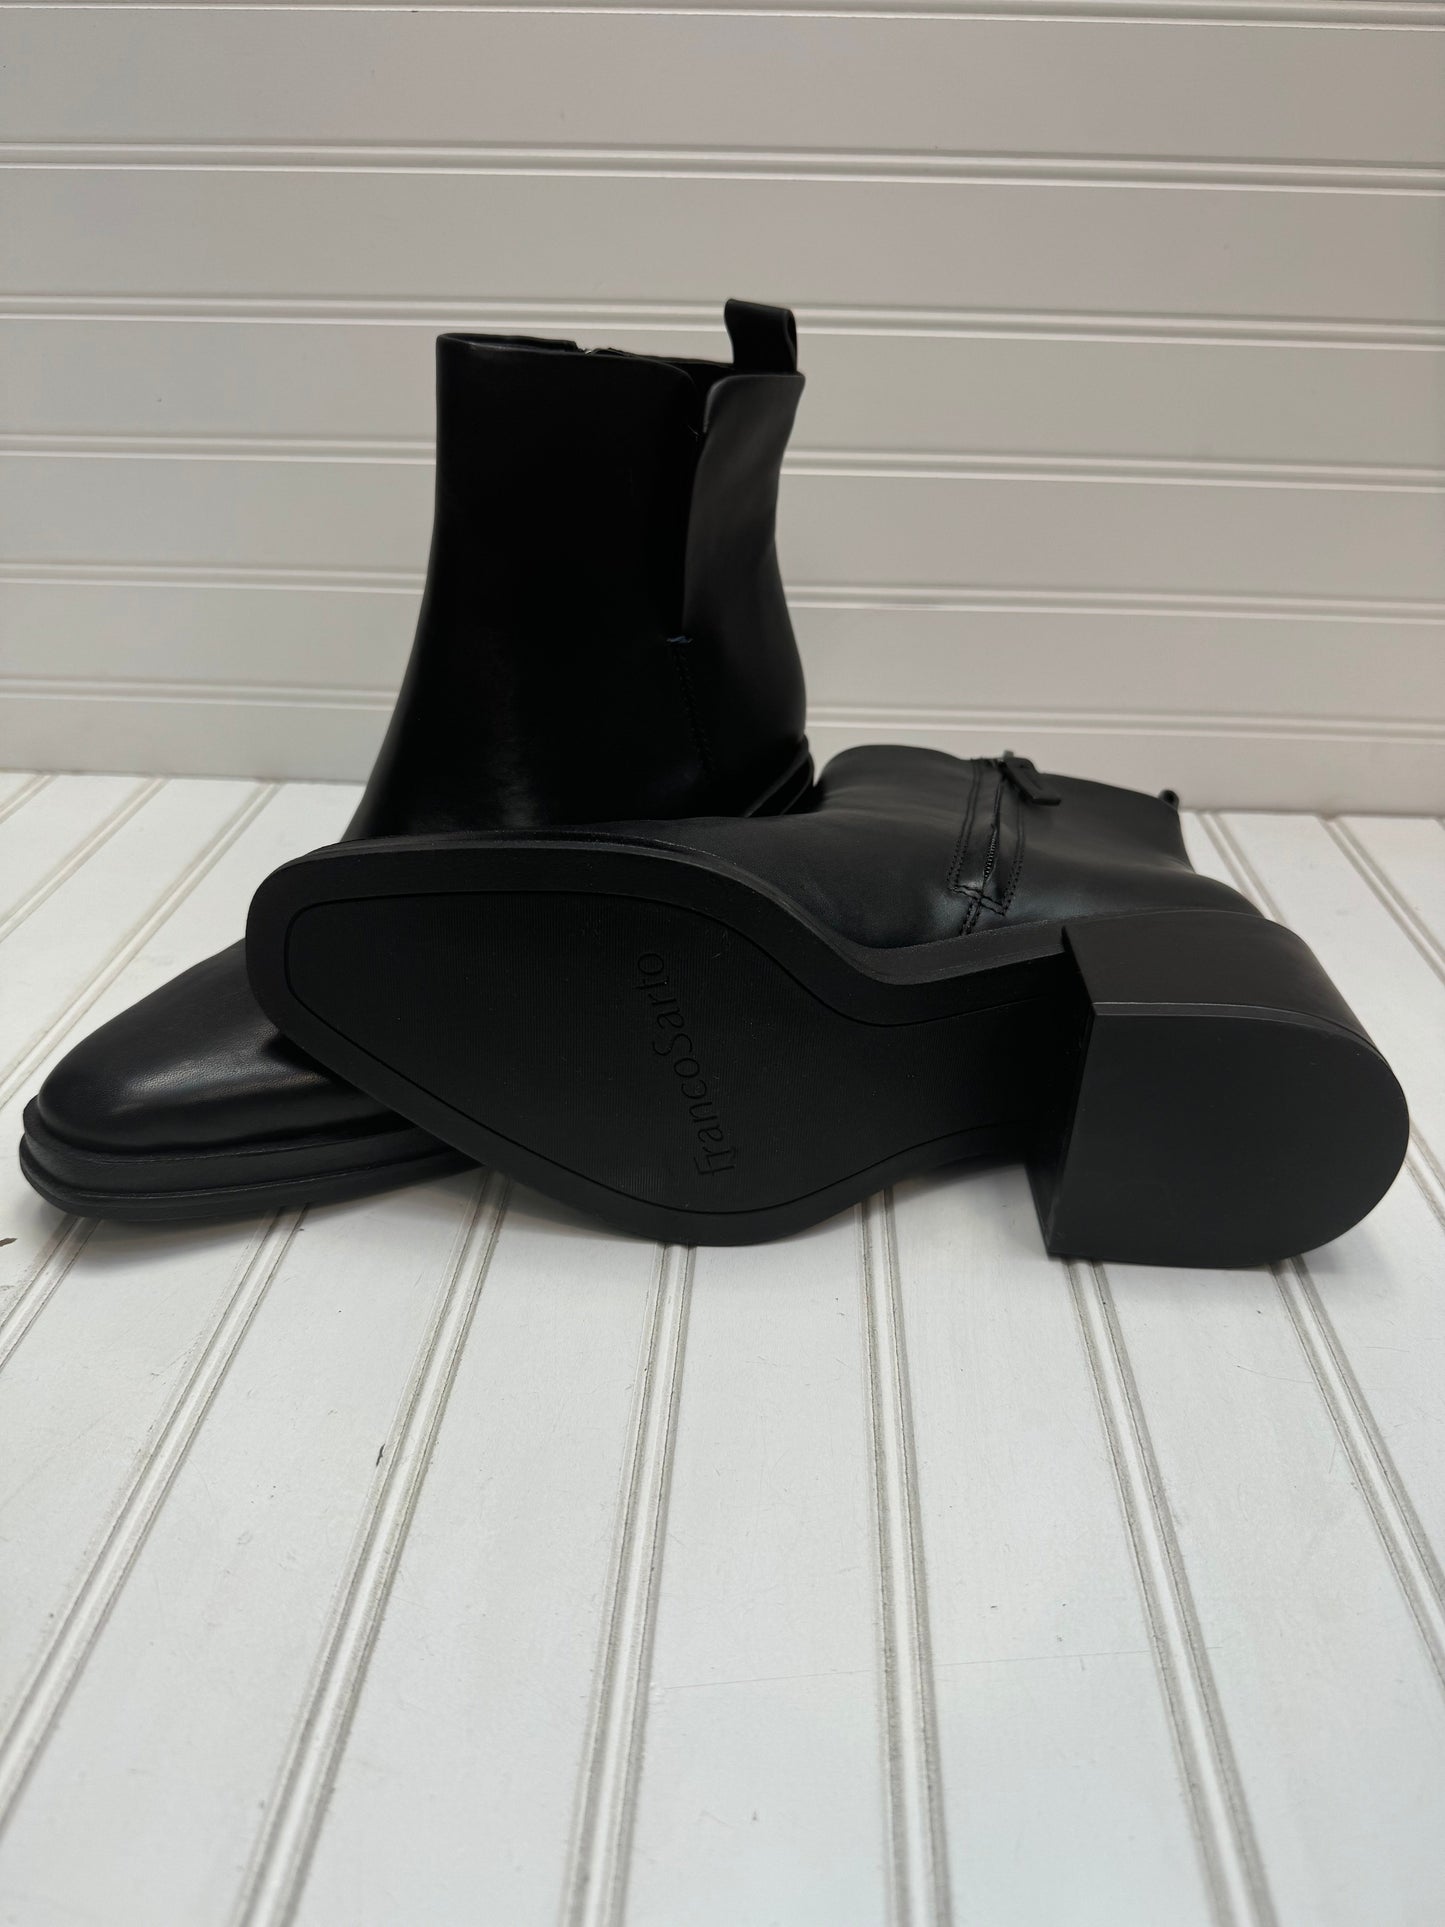 Black Boots Ankle Heels Franco Sarto, Size 9